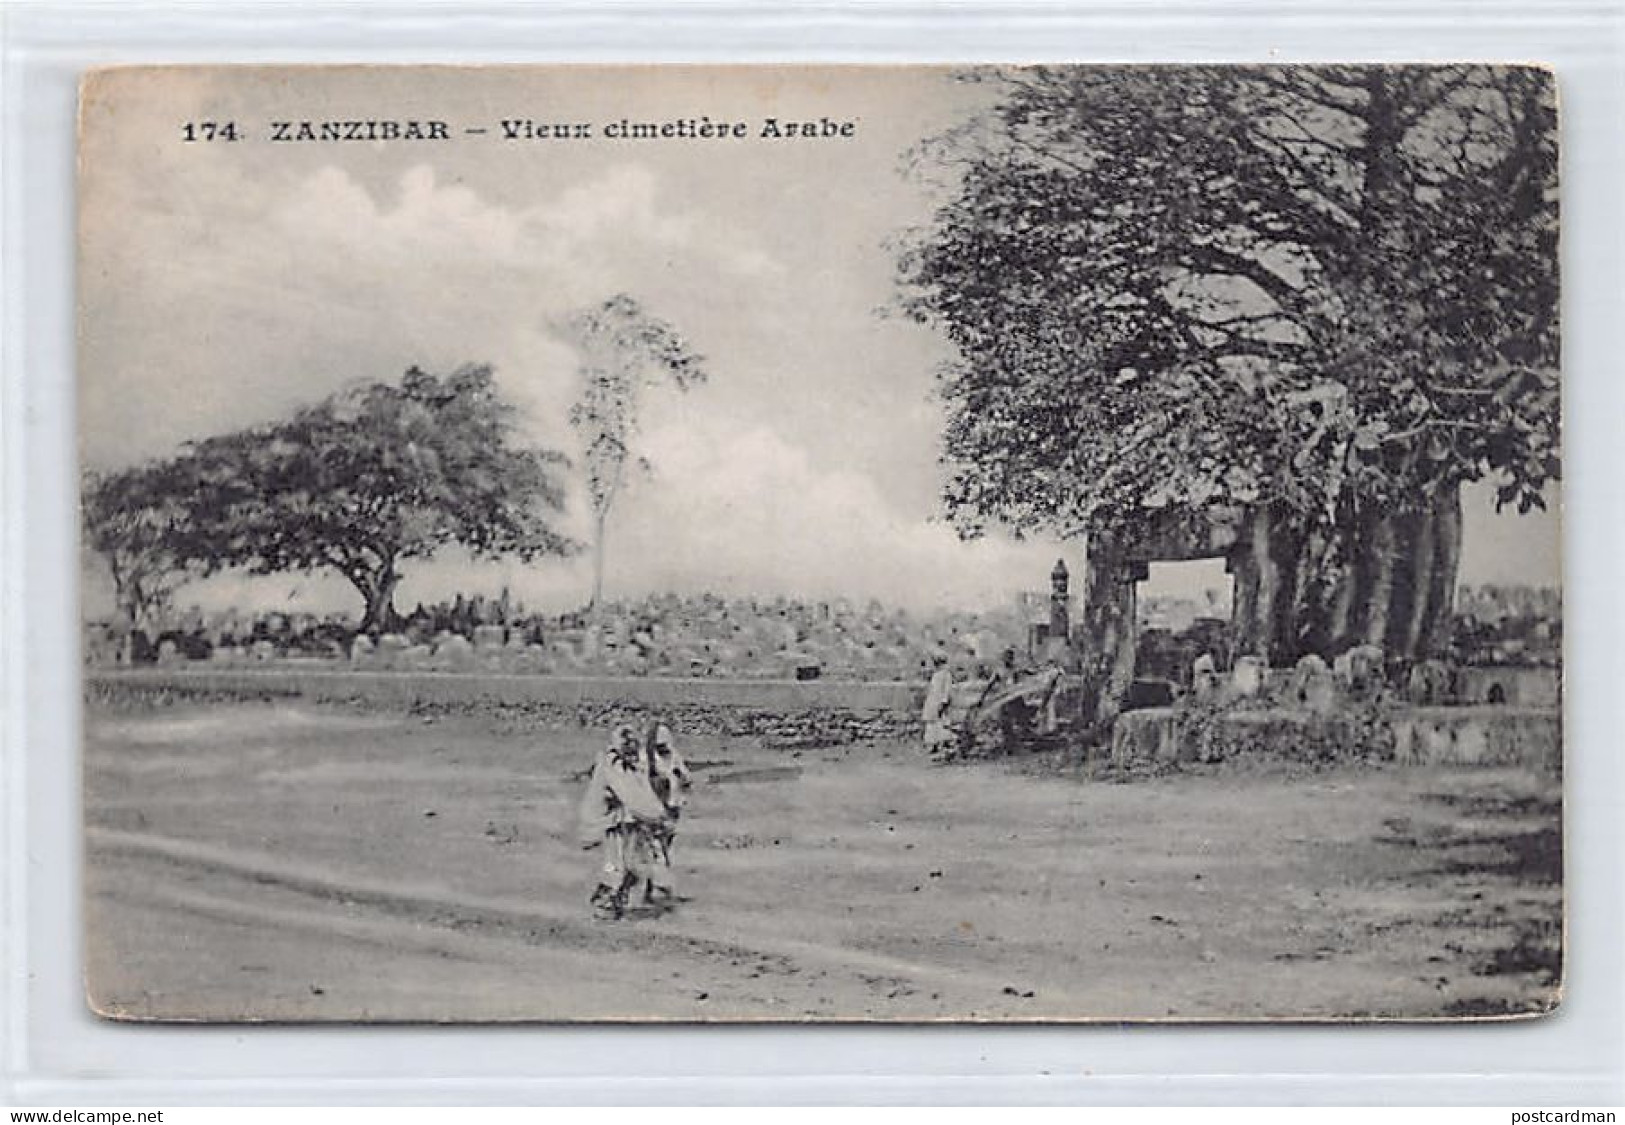 Zanzibar - Old Arab Cemetery - Publ. Messageries Maritimes 174 - Tansania